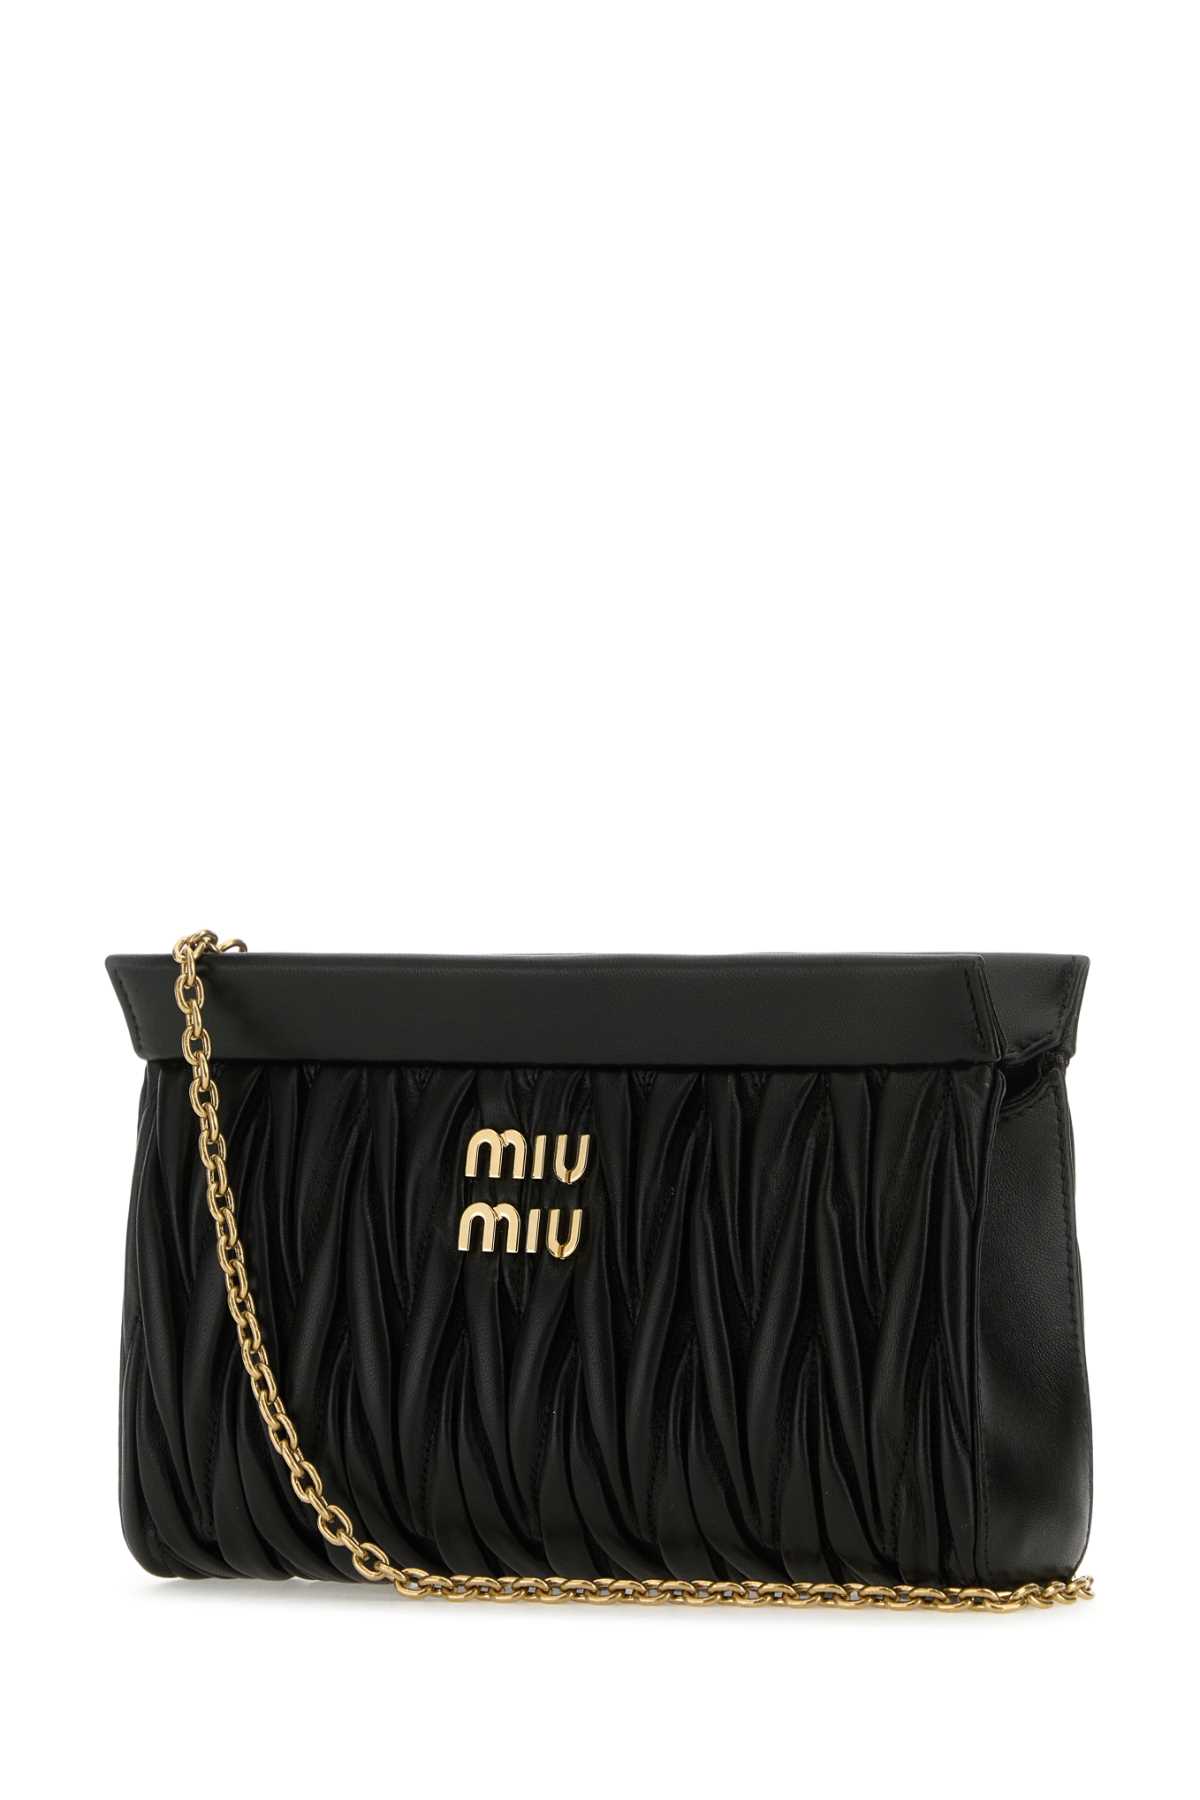 Miu Miu Black Leather Crossbody Bag In Nero